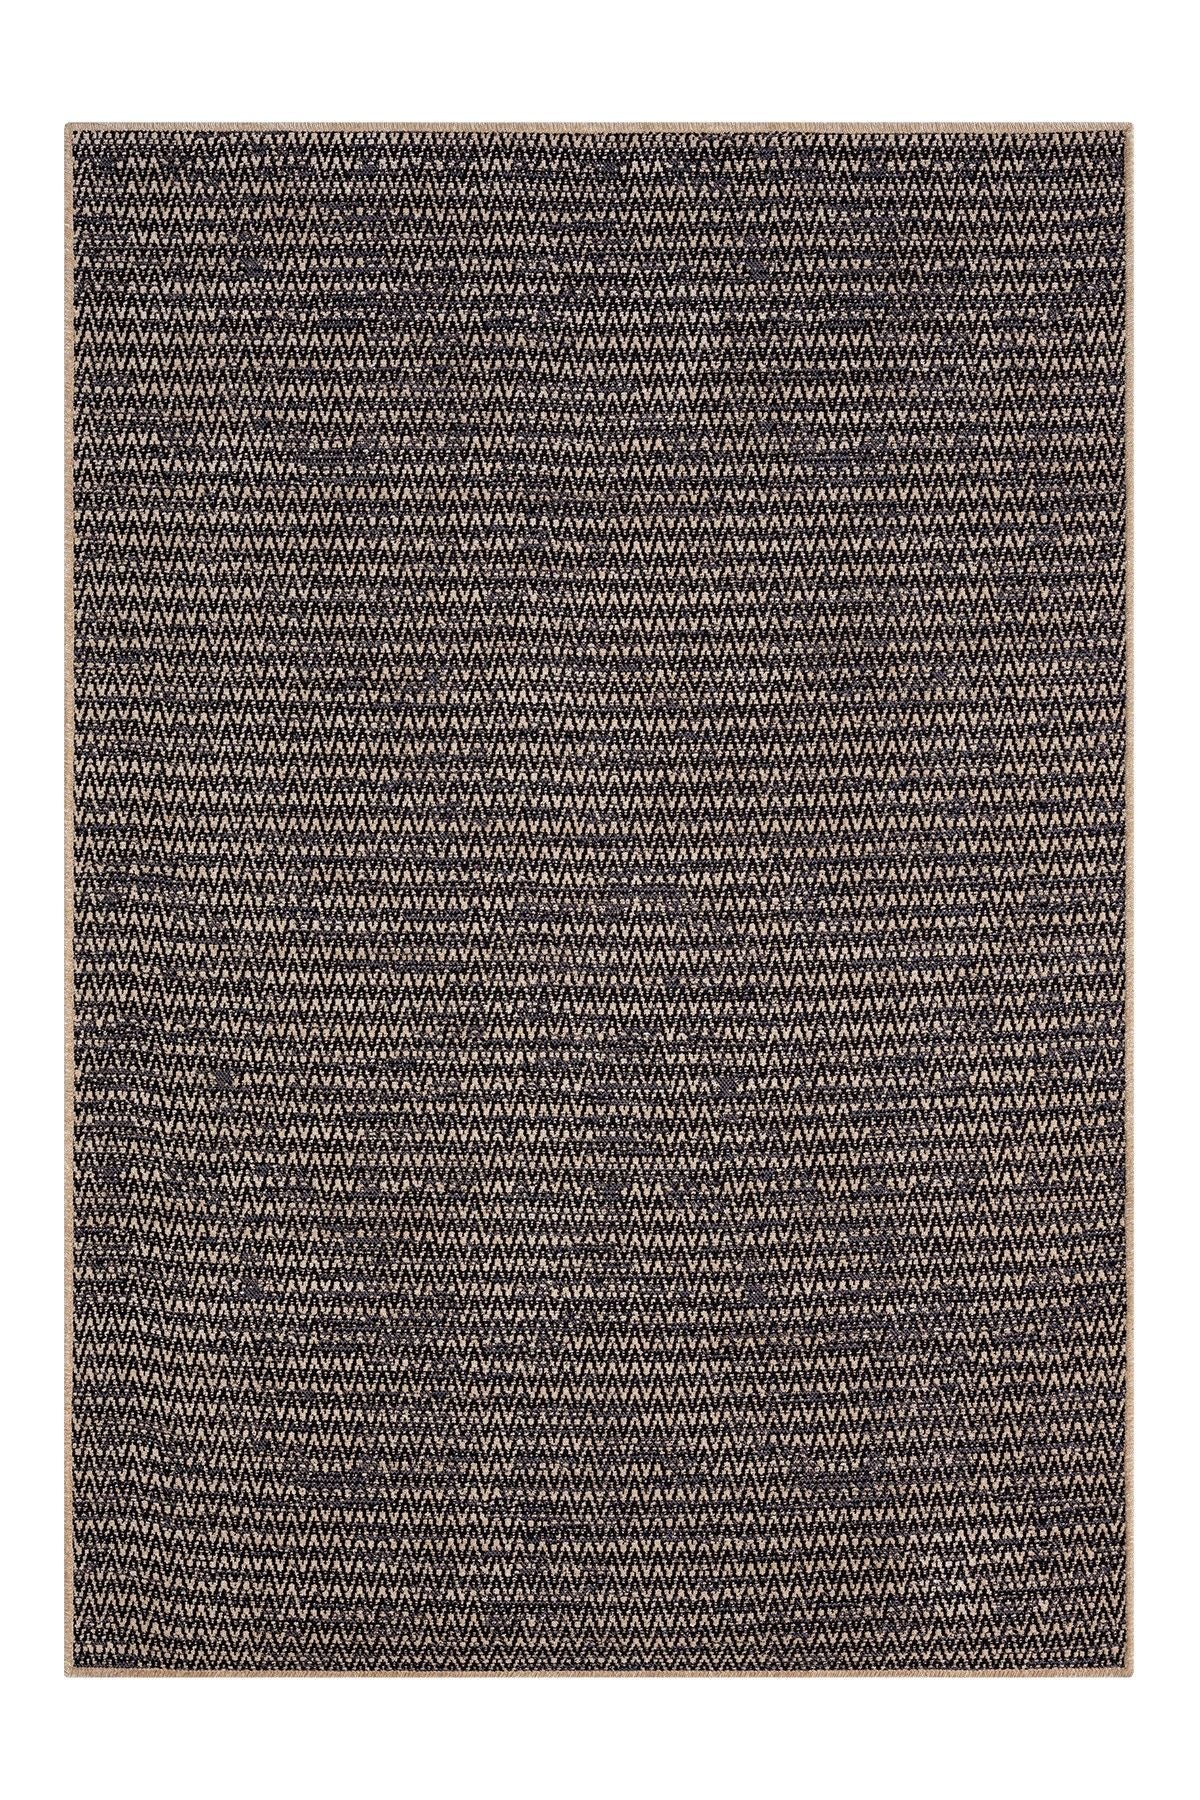 Terapia 3604 - Carpet (80 x 300)